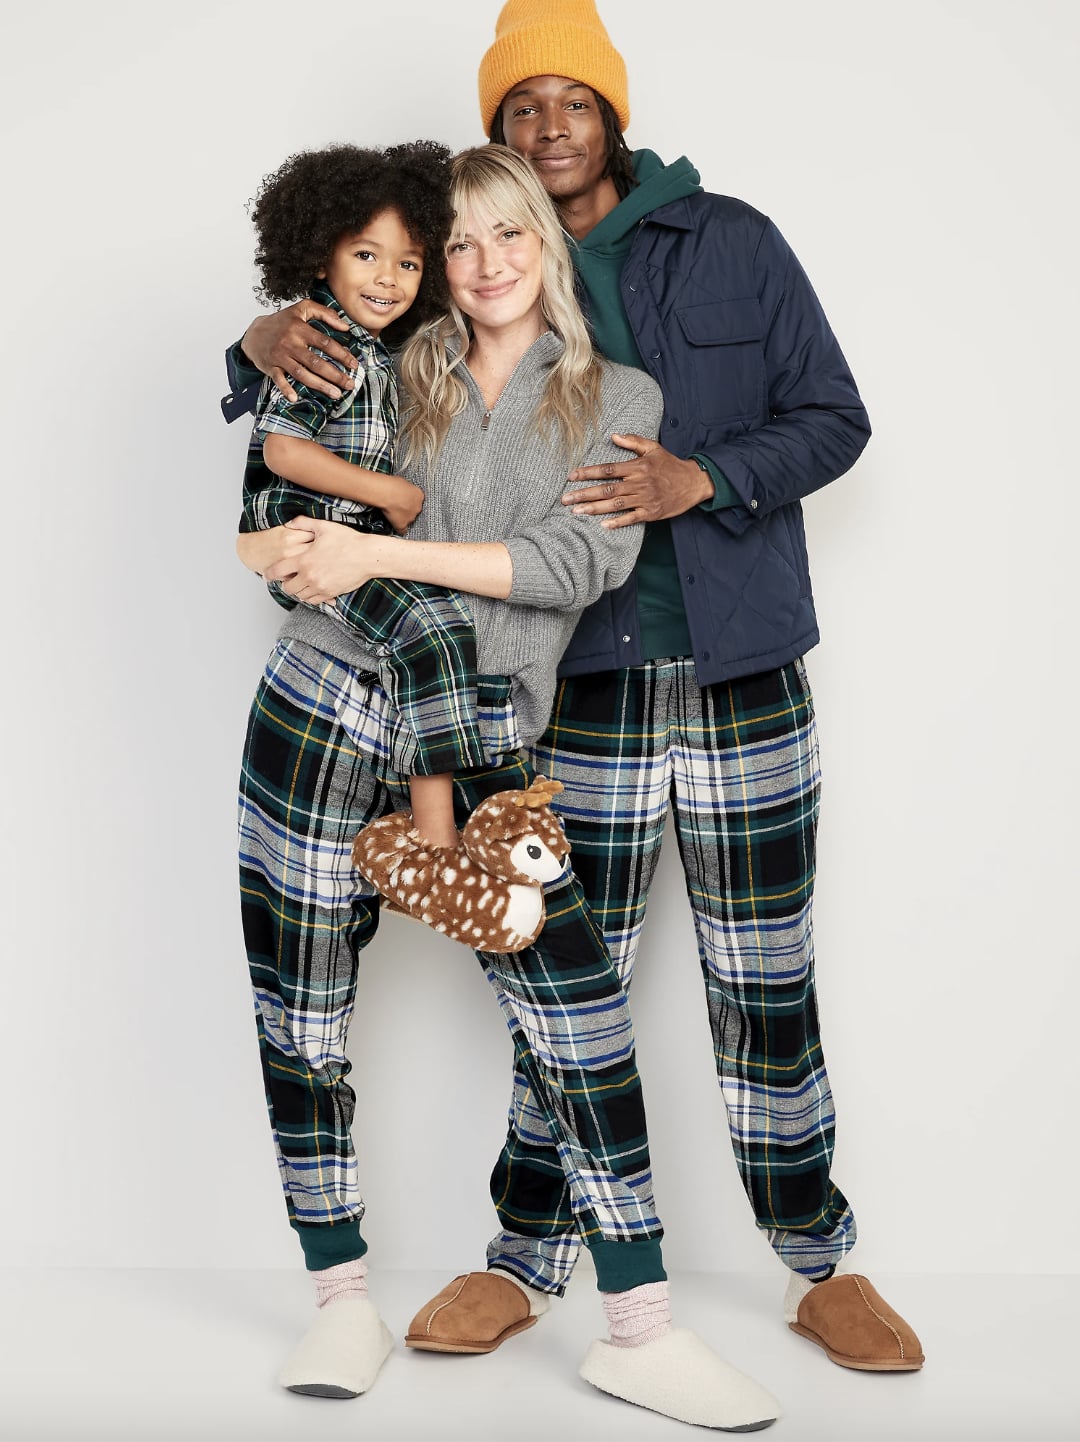 12 Disney Christmas Pajamas the Entire Family Will Love - Inside